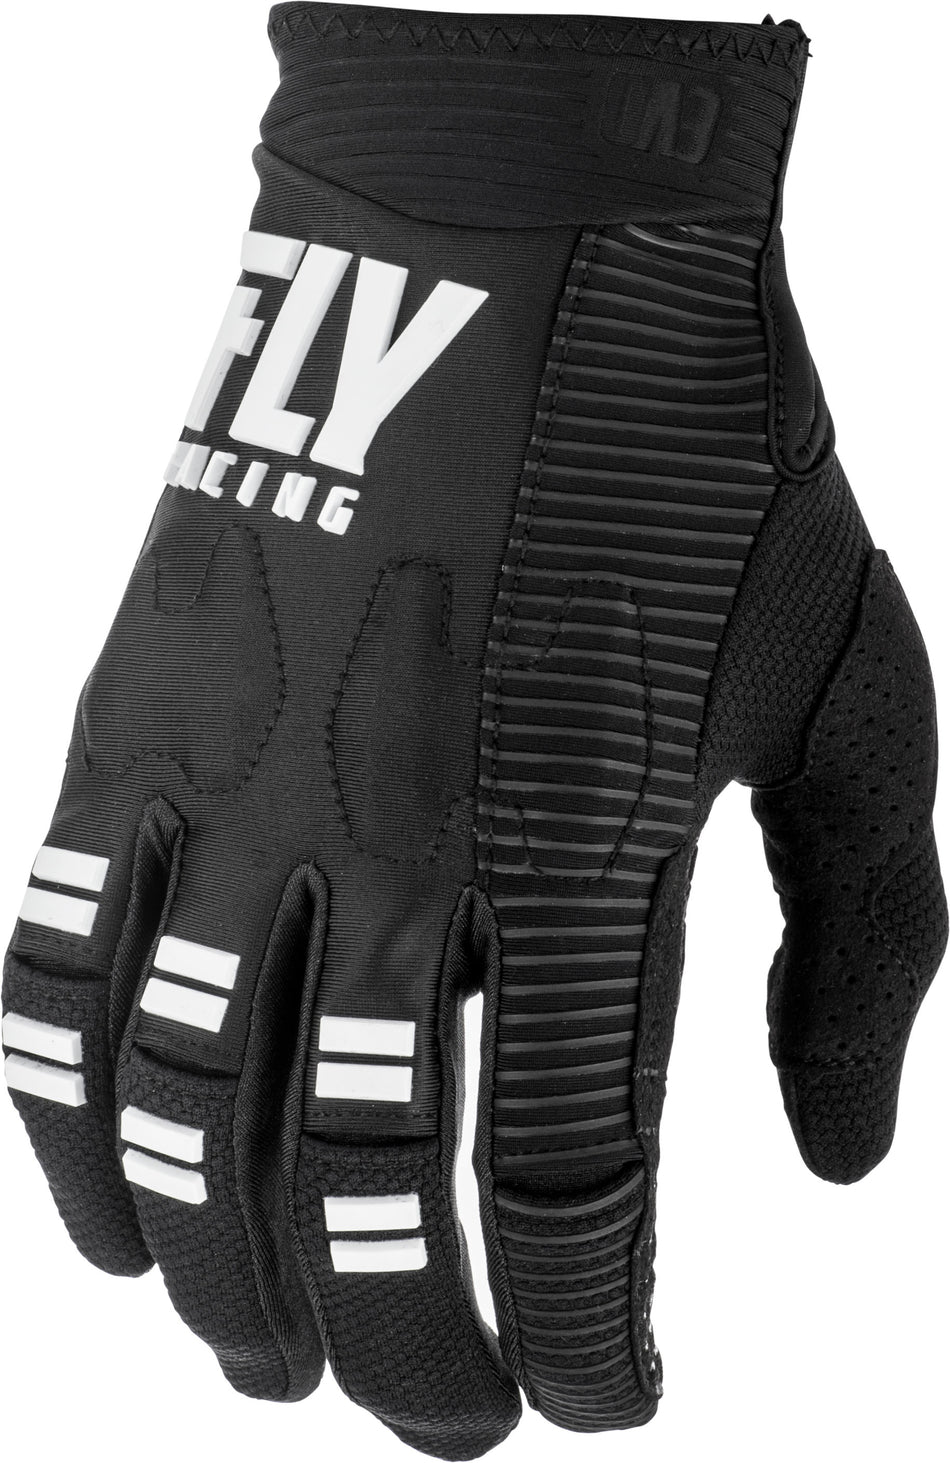 FLY RACING Evolution Dst Gloves Black/White Sz 07 372-11007